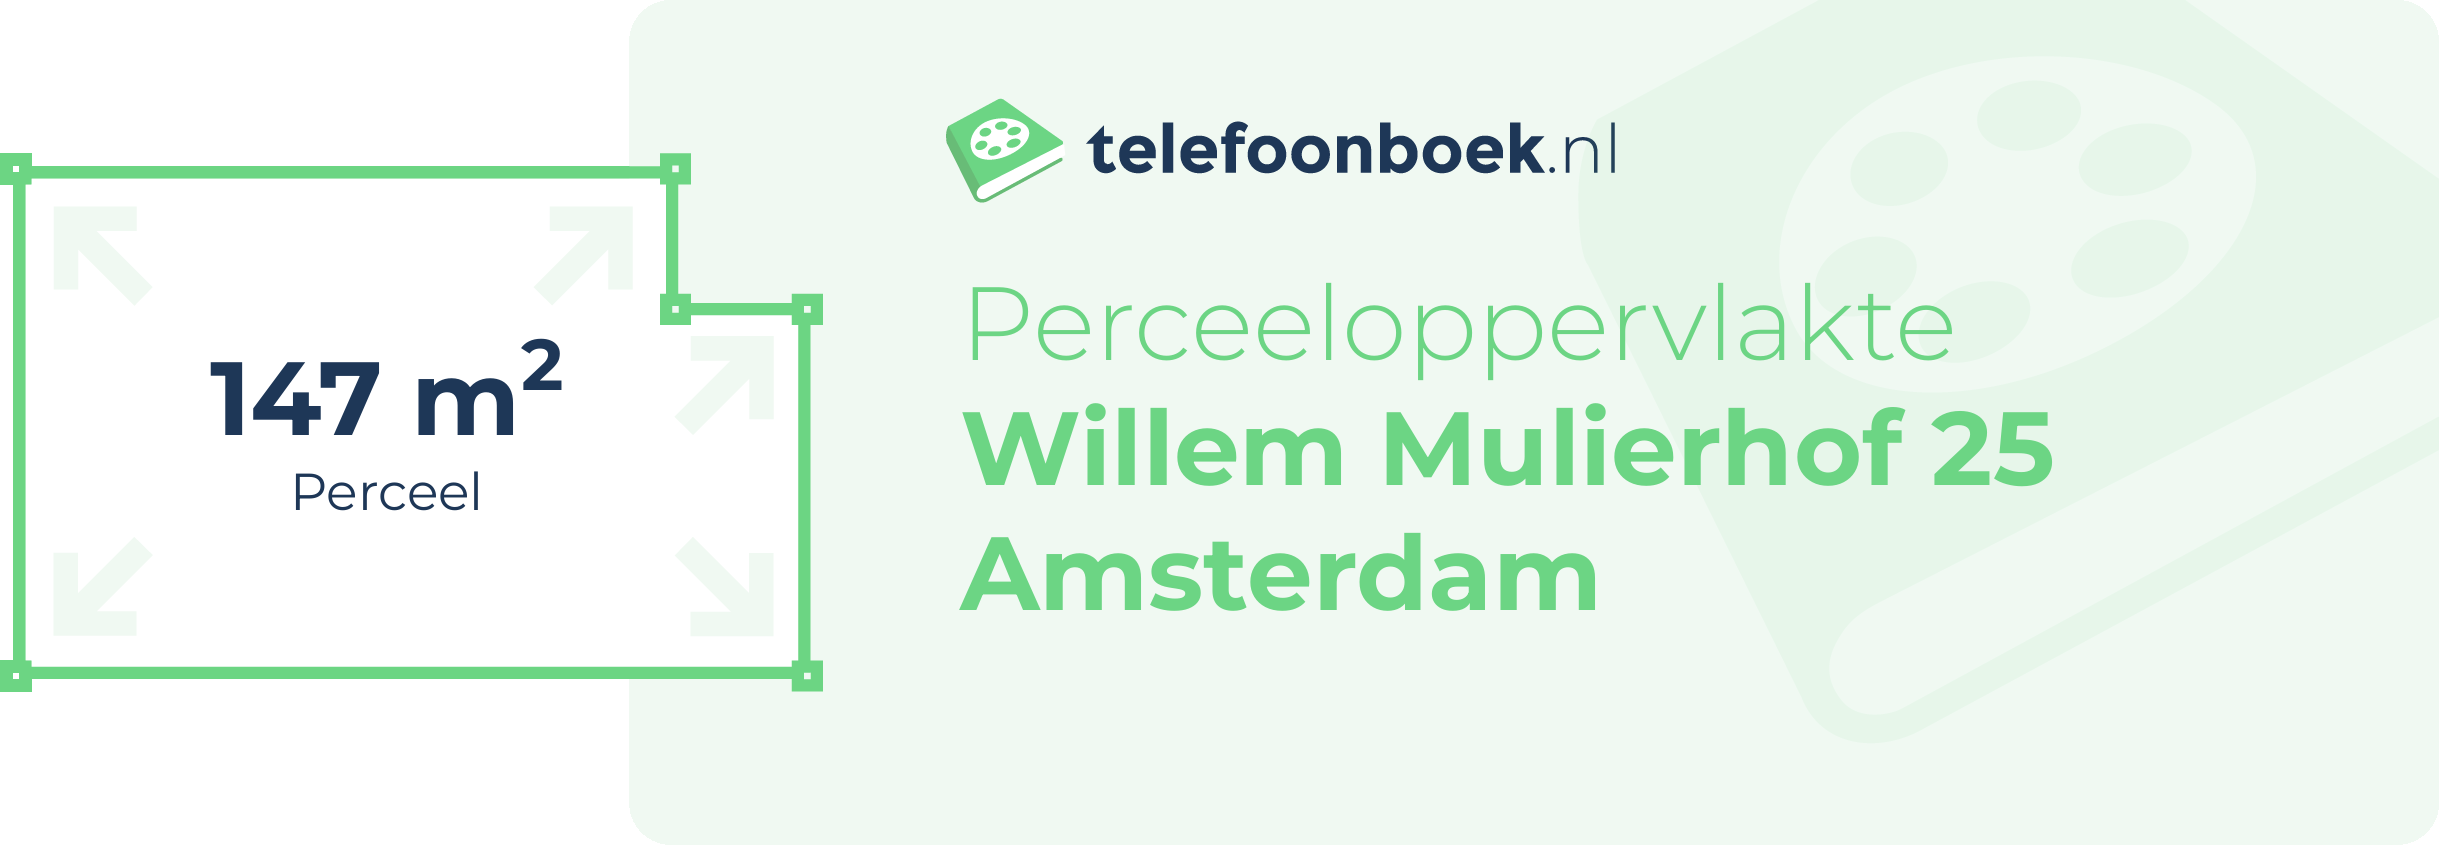 Perceeloppervlakte Willem Mulierhof 25 Amsterdam